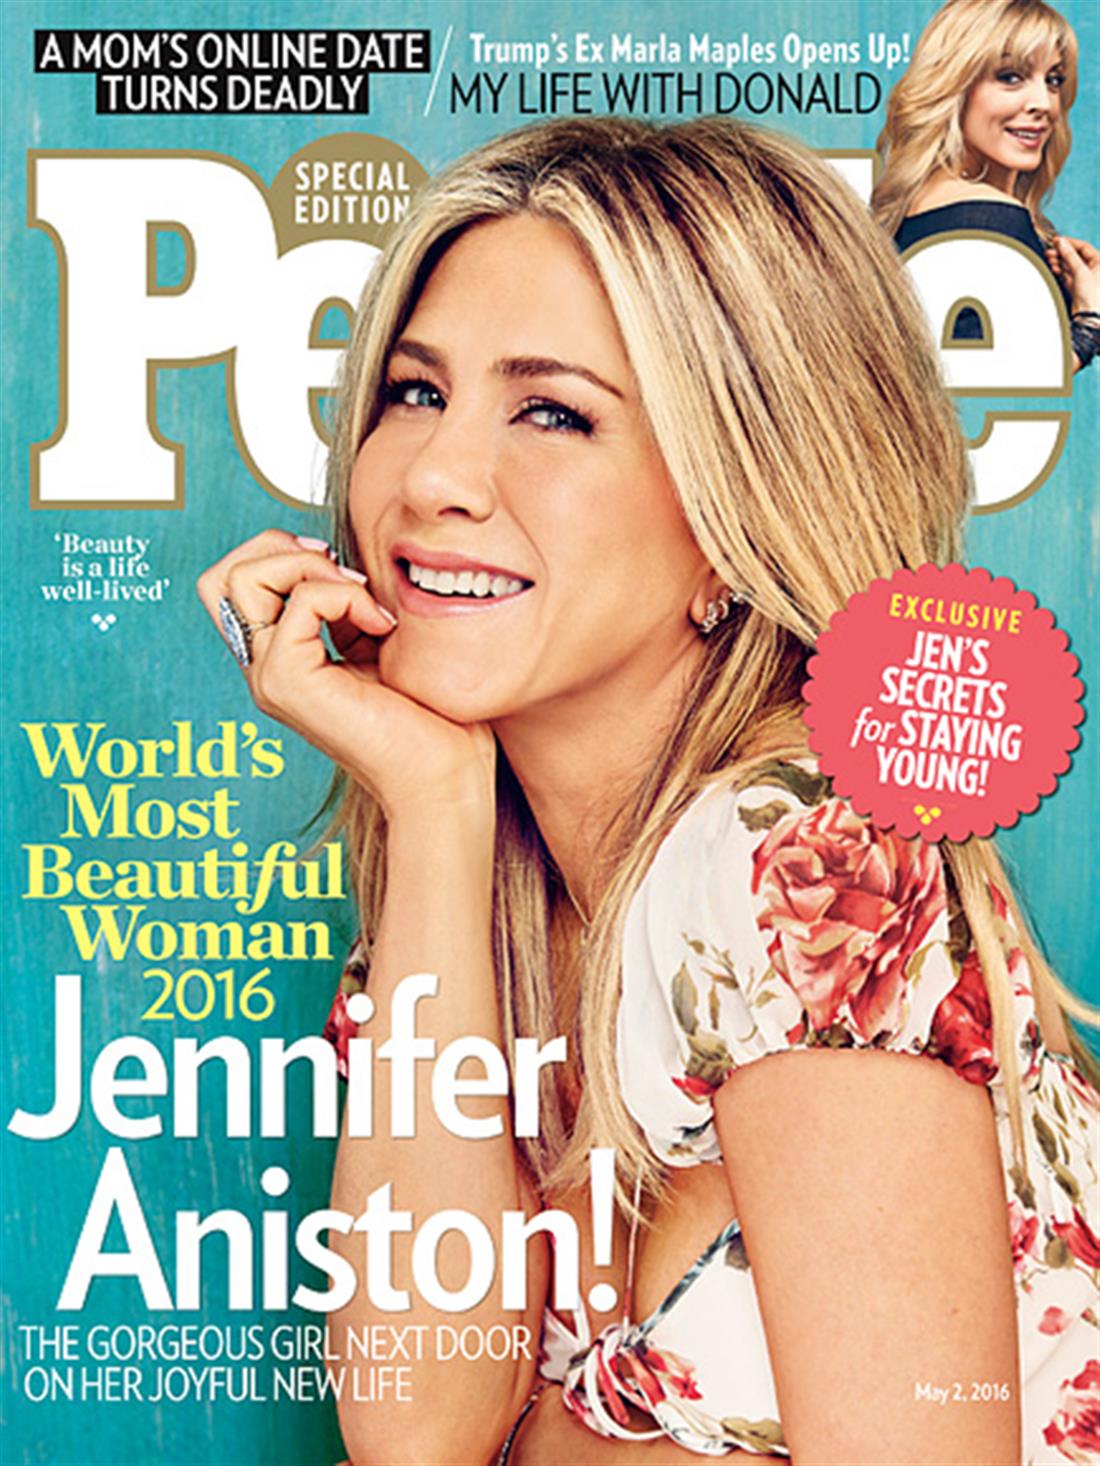 Jennifer Aniston - περιοδικό People - ομορφότερη γυναίκα 2016